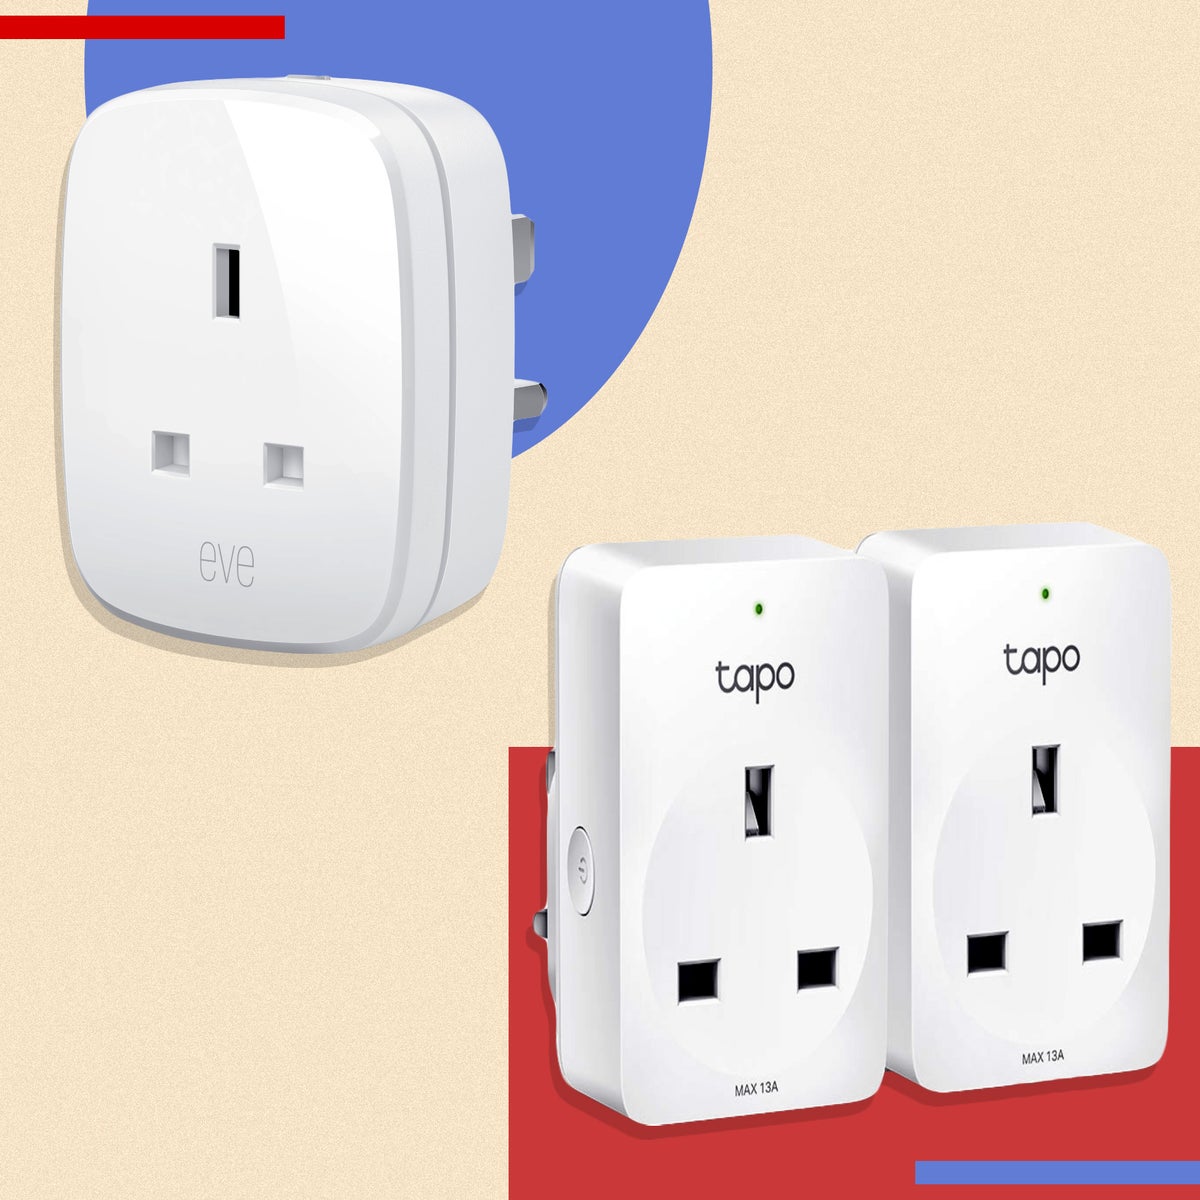 Kasa smart plug review: This energy monitoring plug is great